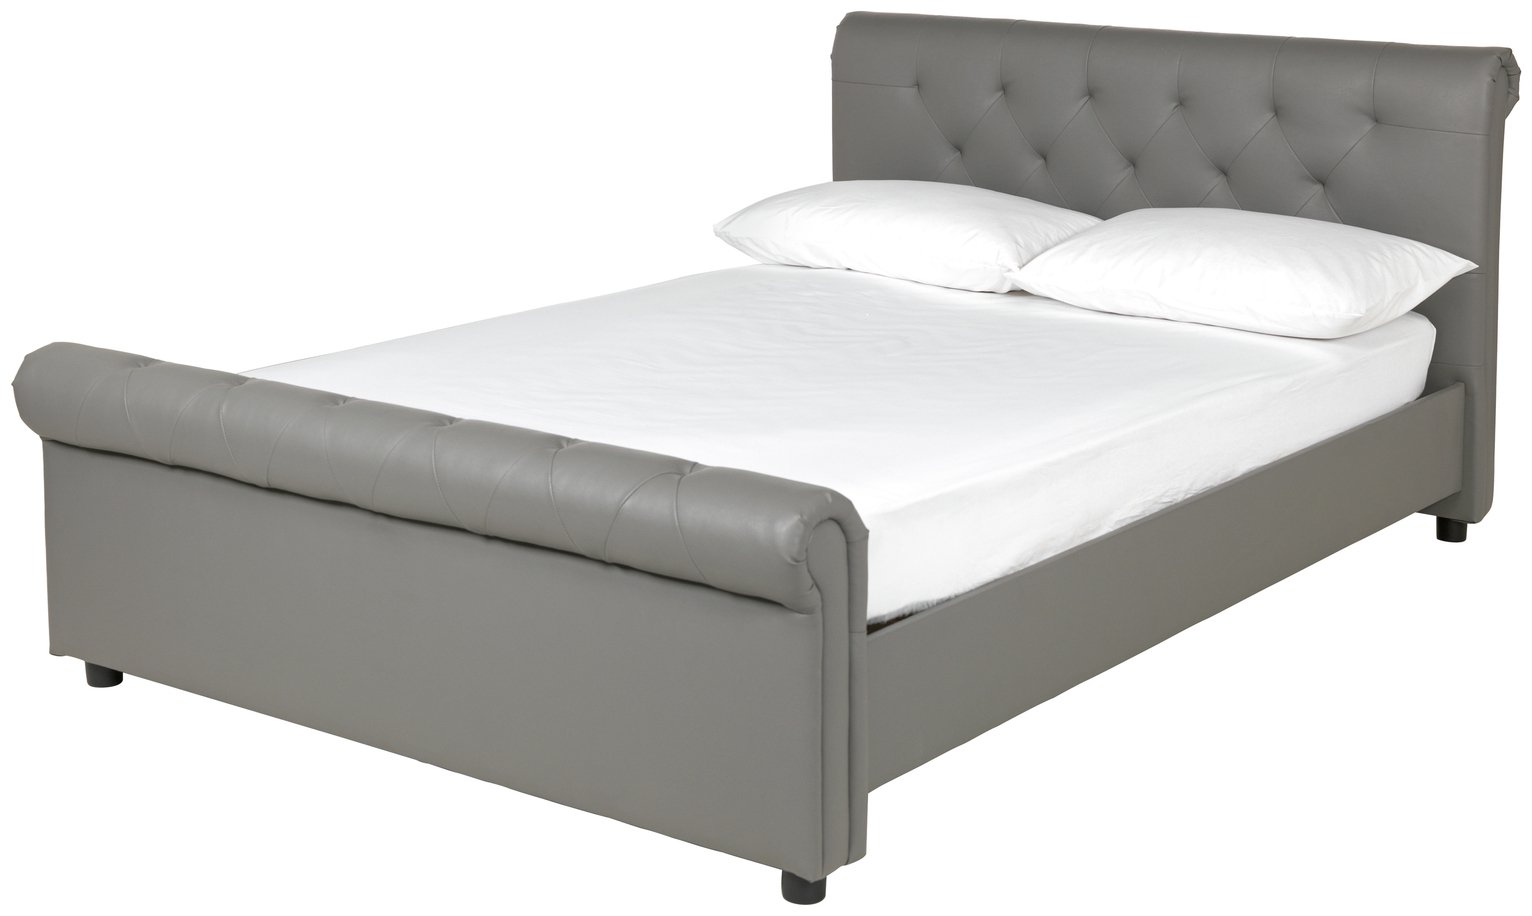 Argos Home Hayford Kingsize Bed Frame review